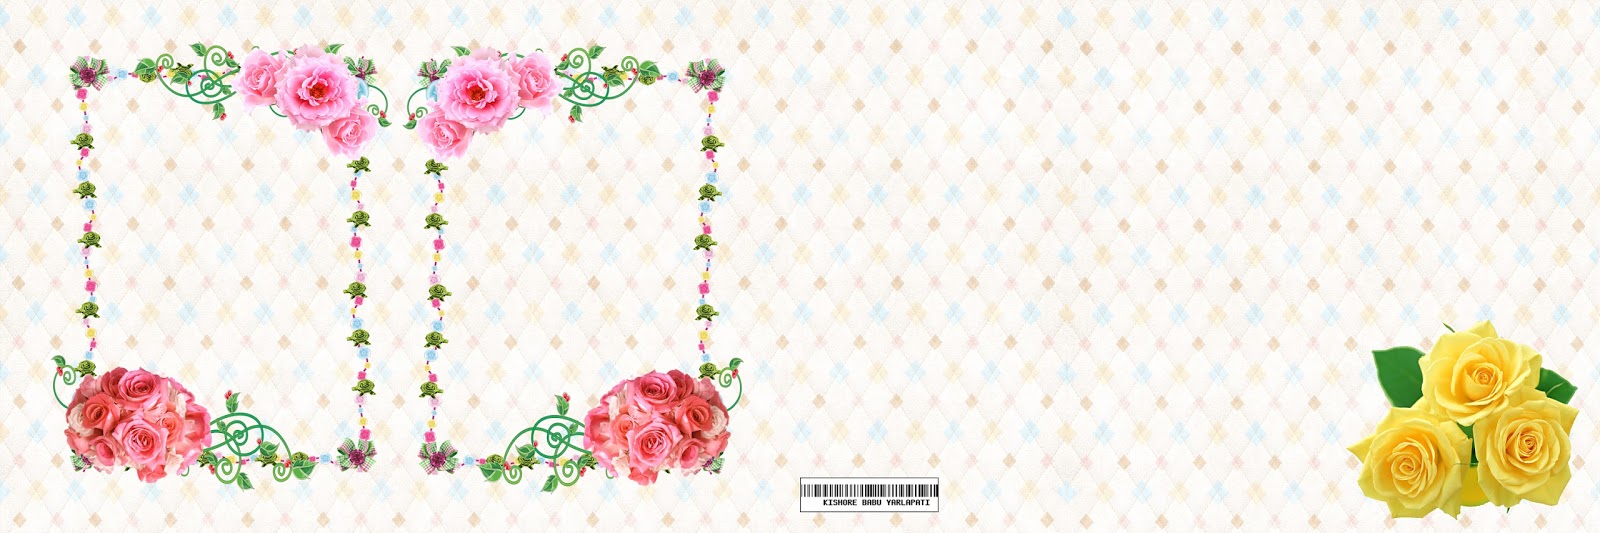 Photoshop Wedding Templates - Frame Floral Fotos Png - HD Wallpaper 